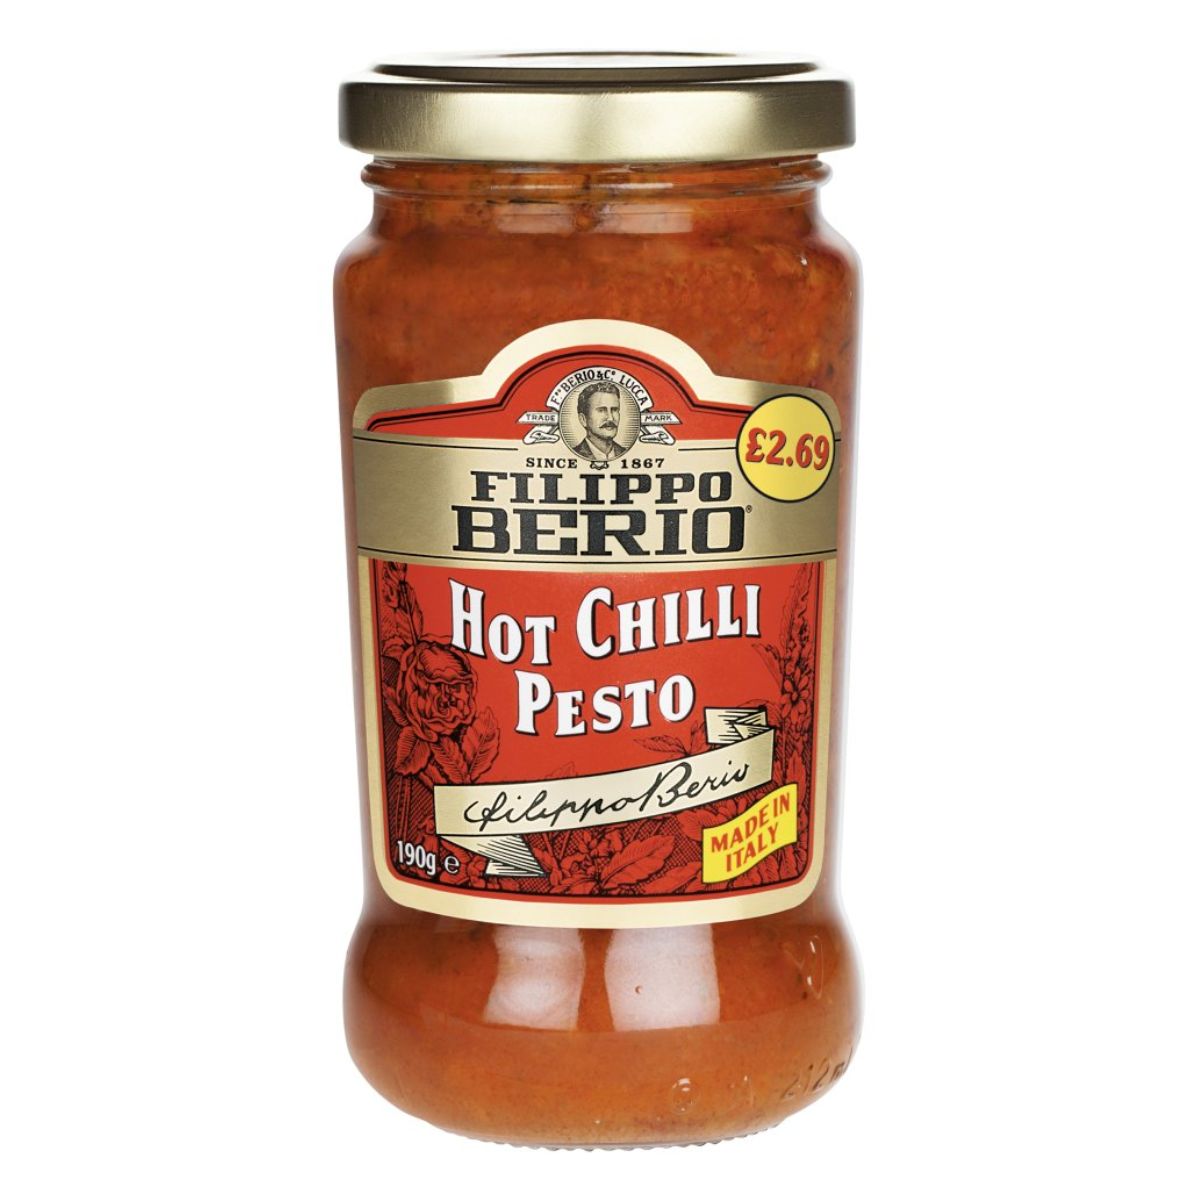 A jar of Filippo Berio - Hot Chilli Pesto - 190g on a white background.